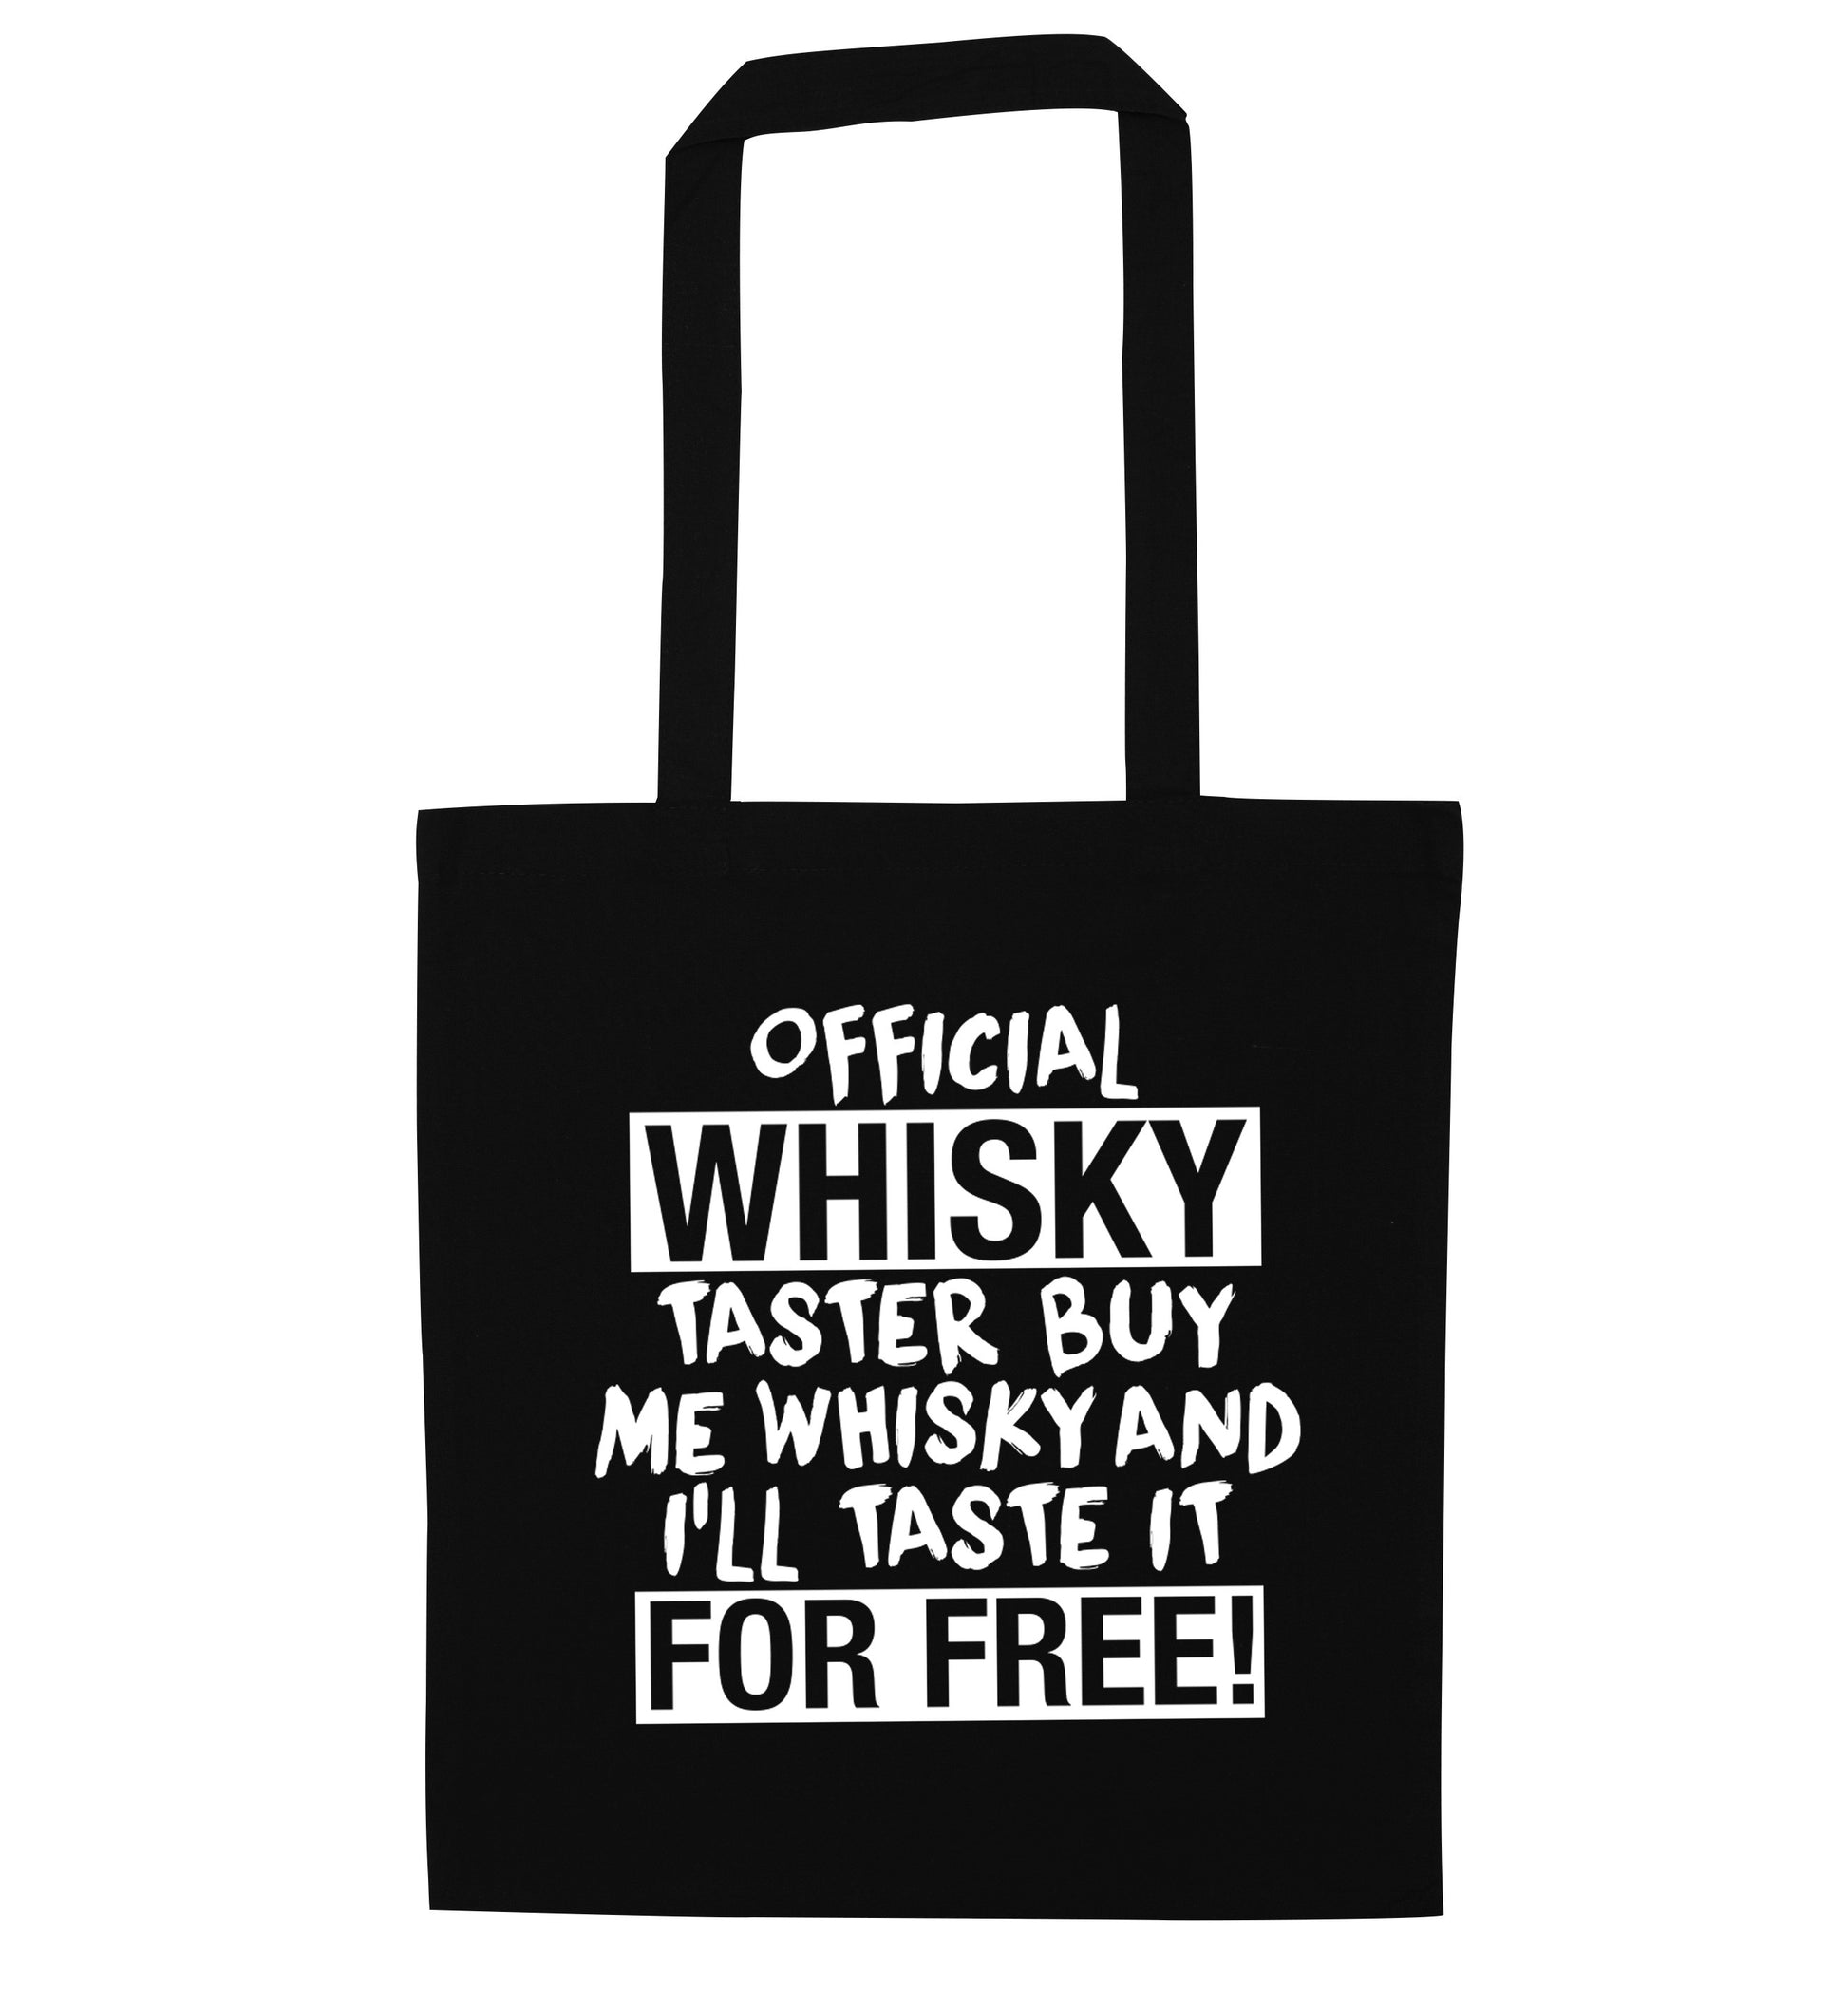 Official whisky taster buy me whisky and I'll taste it for free black tote bag